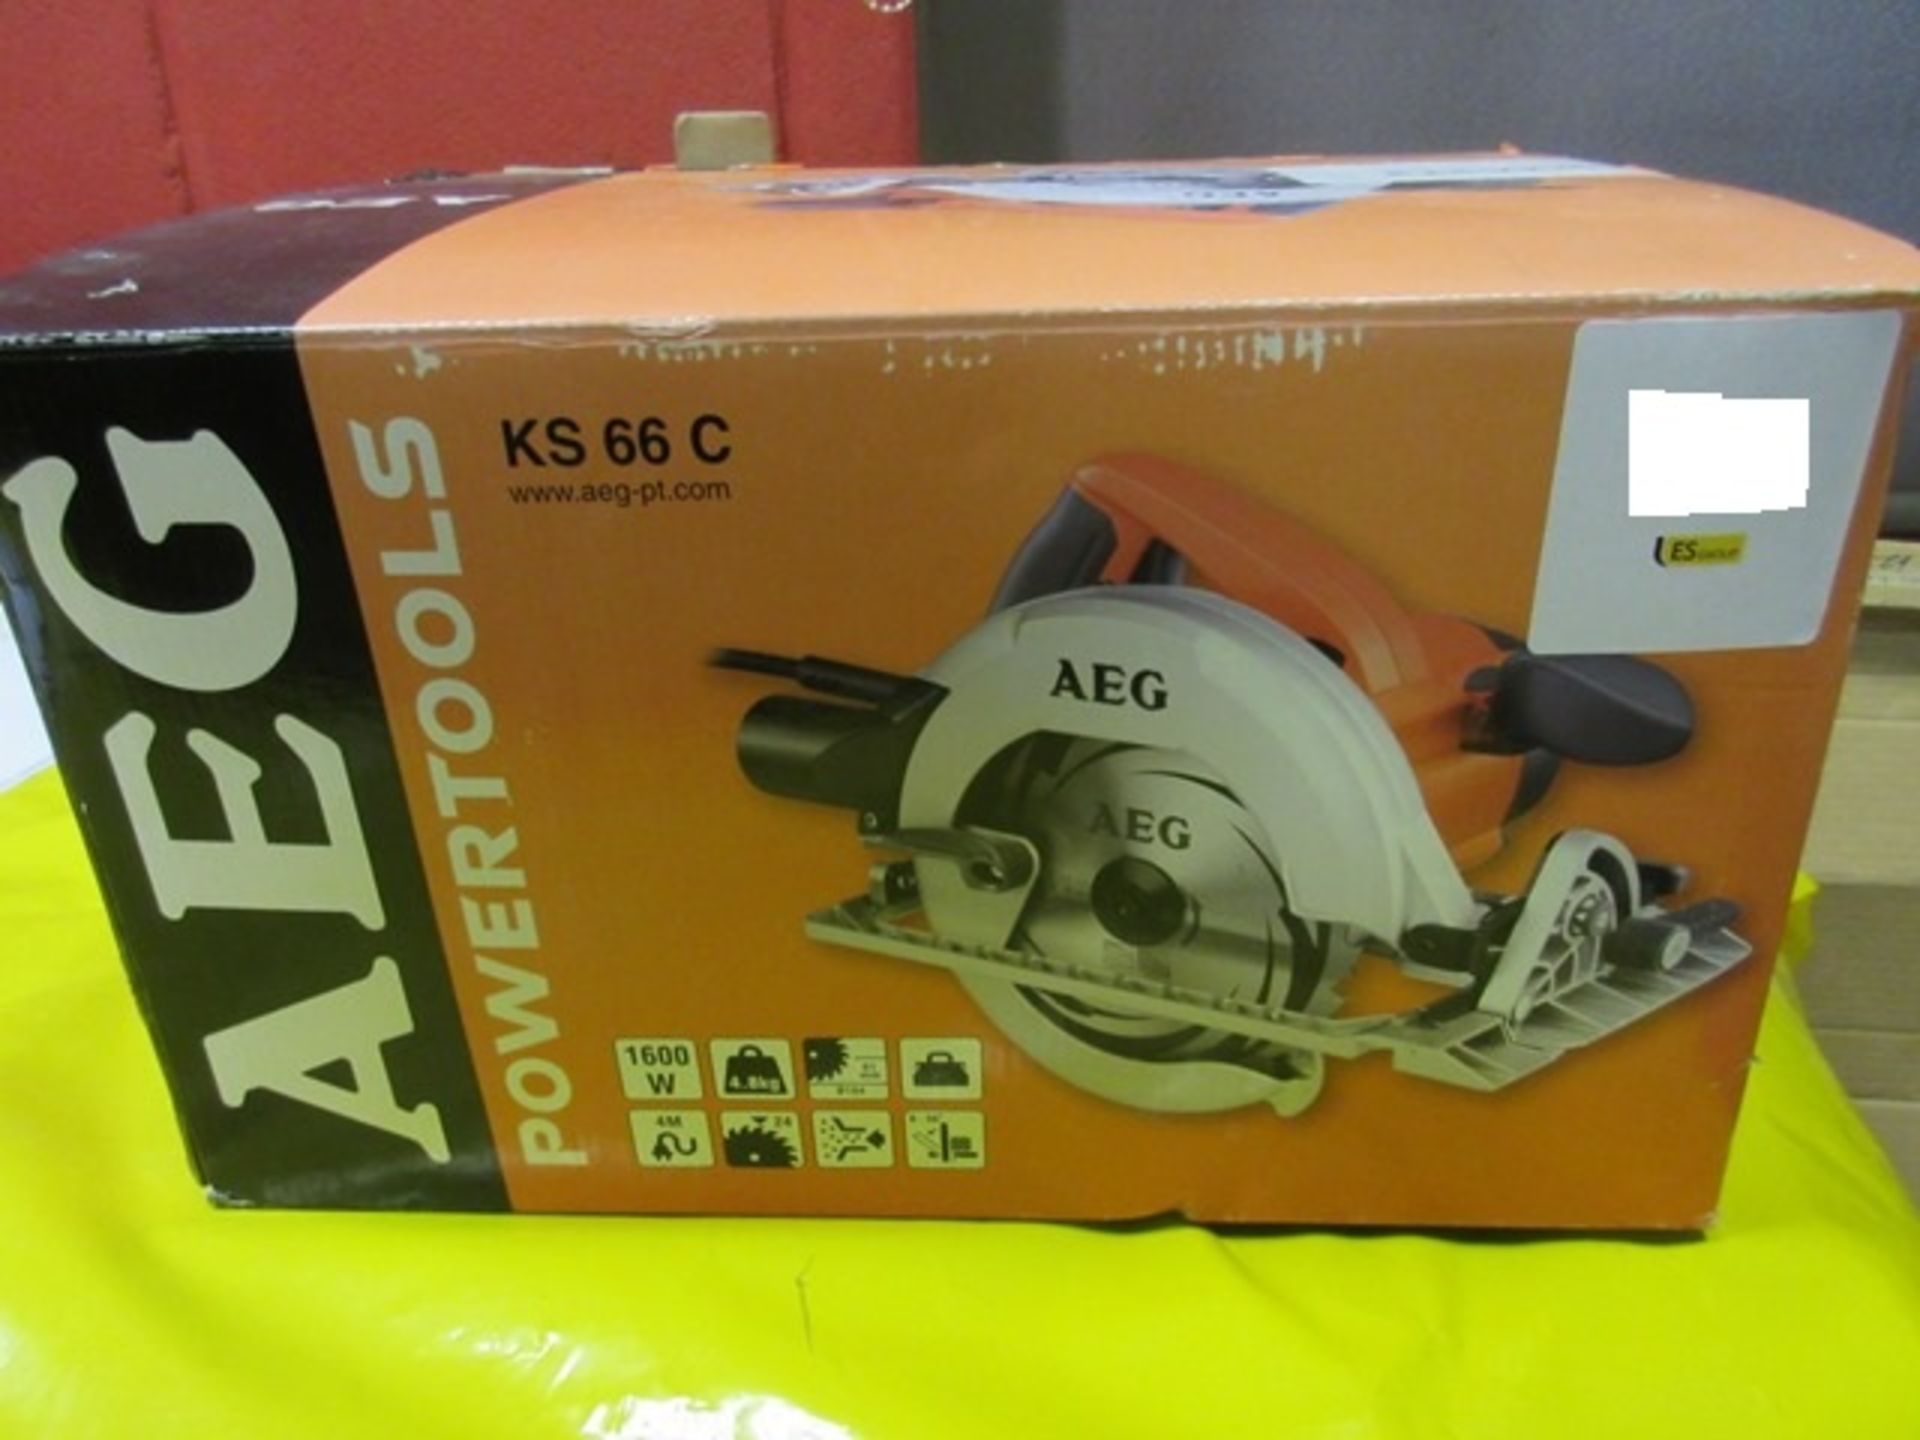 AEG KS66C electric circular saw, 240v, 1600w